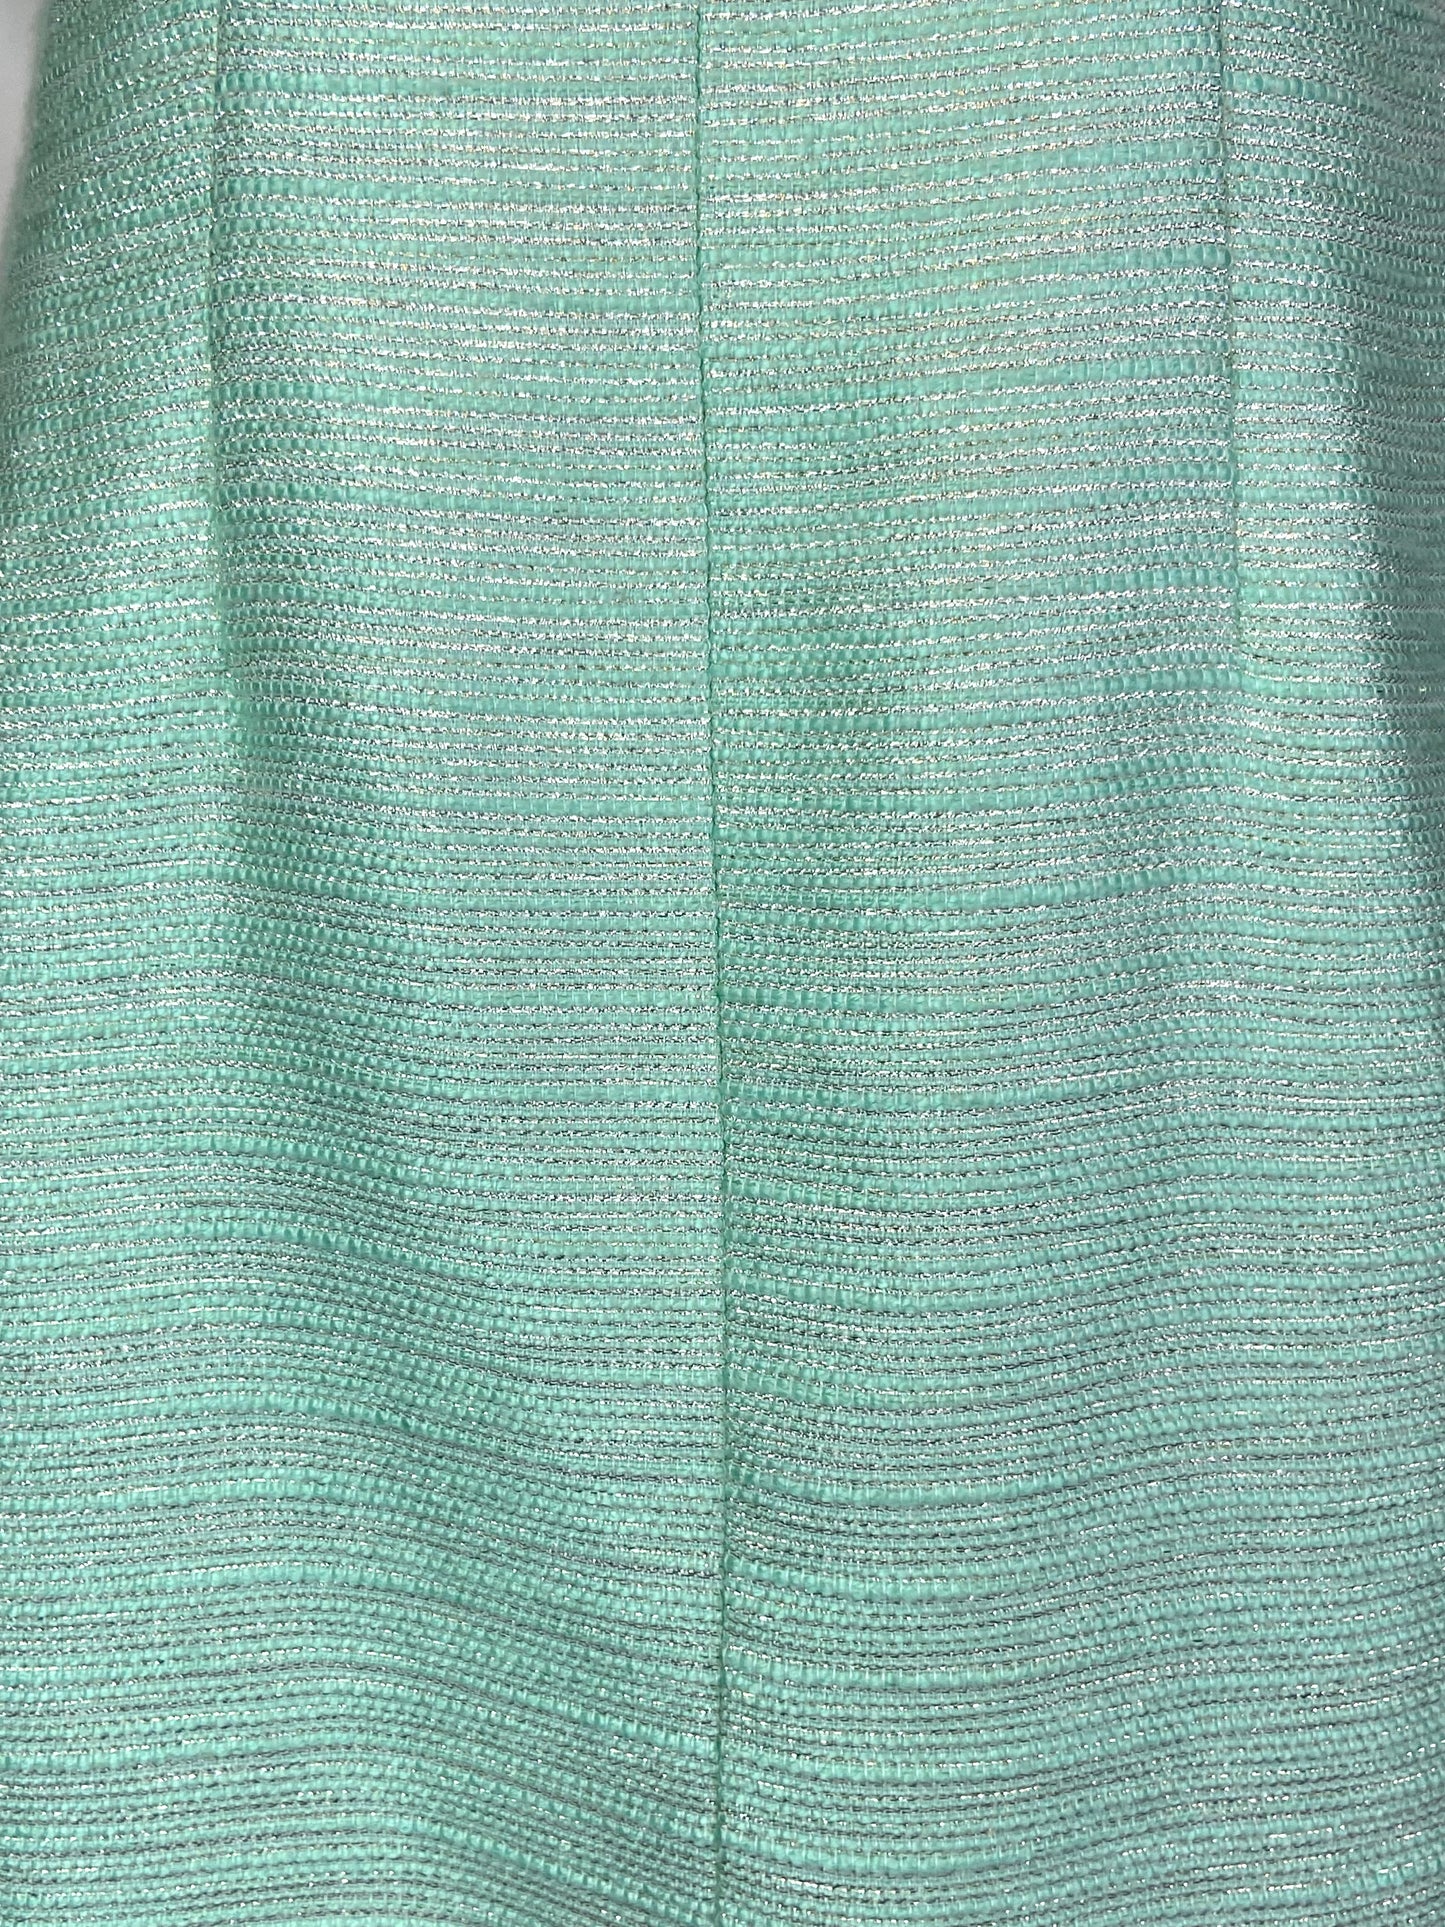 MIAMI Lime Green Metallic Shift Dress XXS